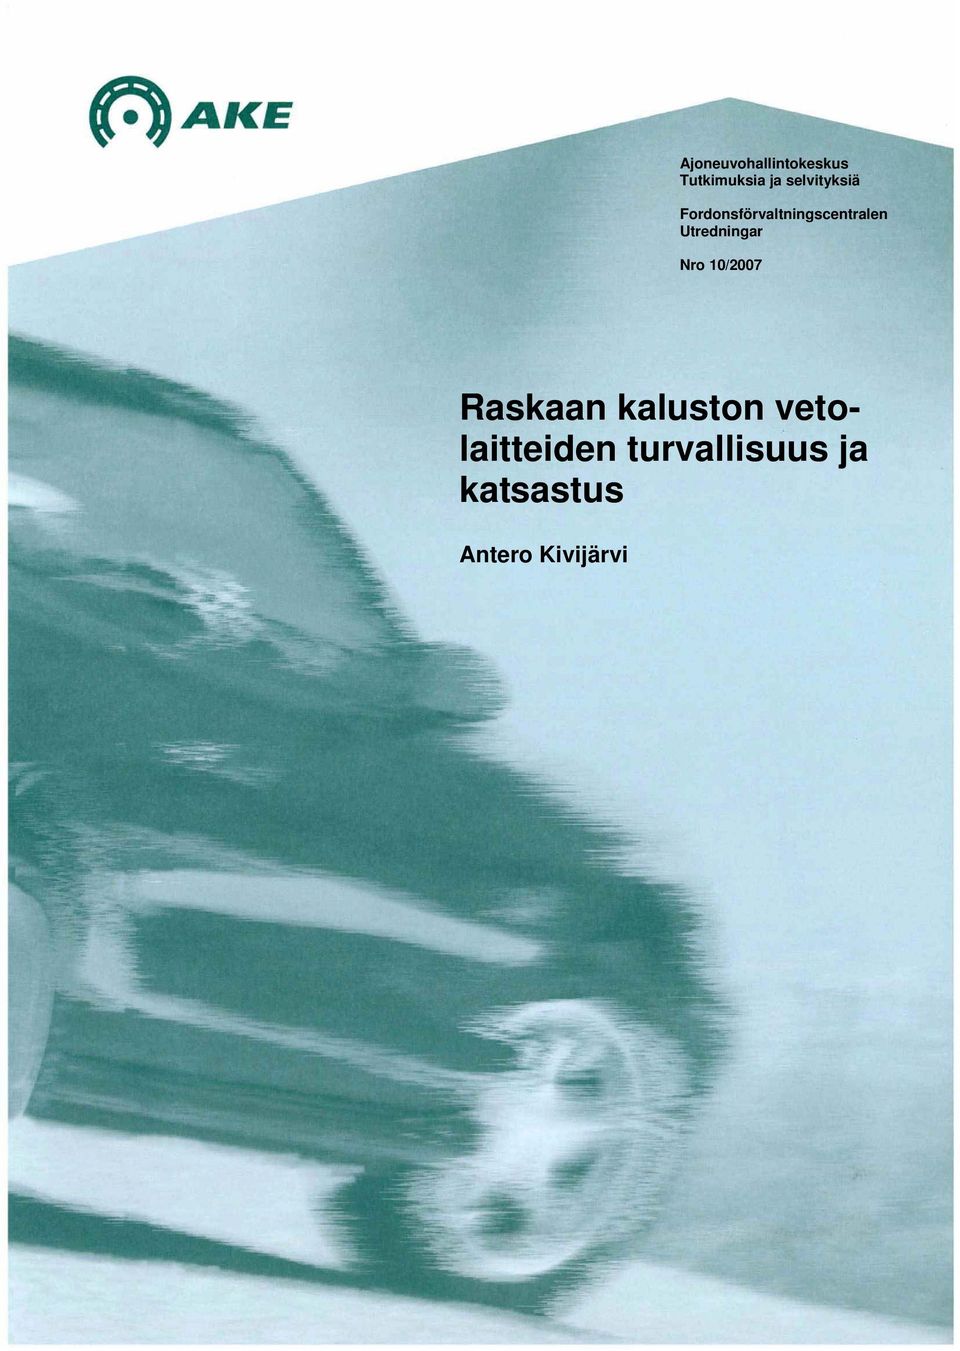 Utredningar Nro 10/2007 Raskaan kaluston